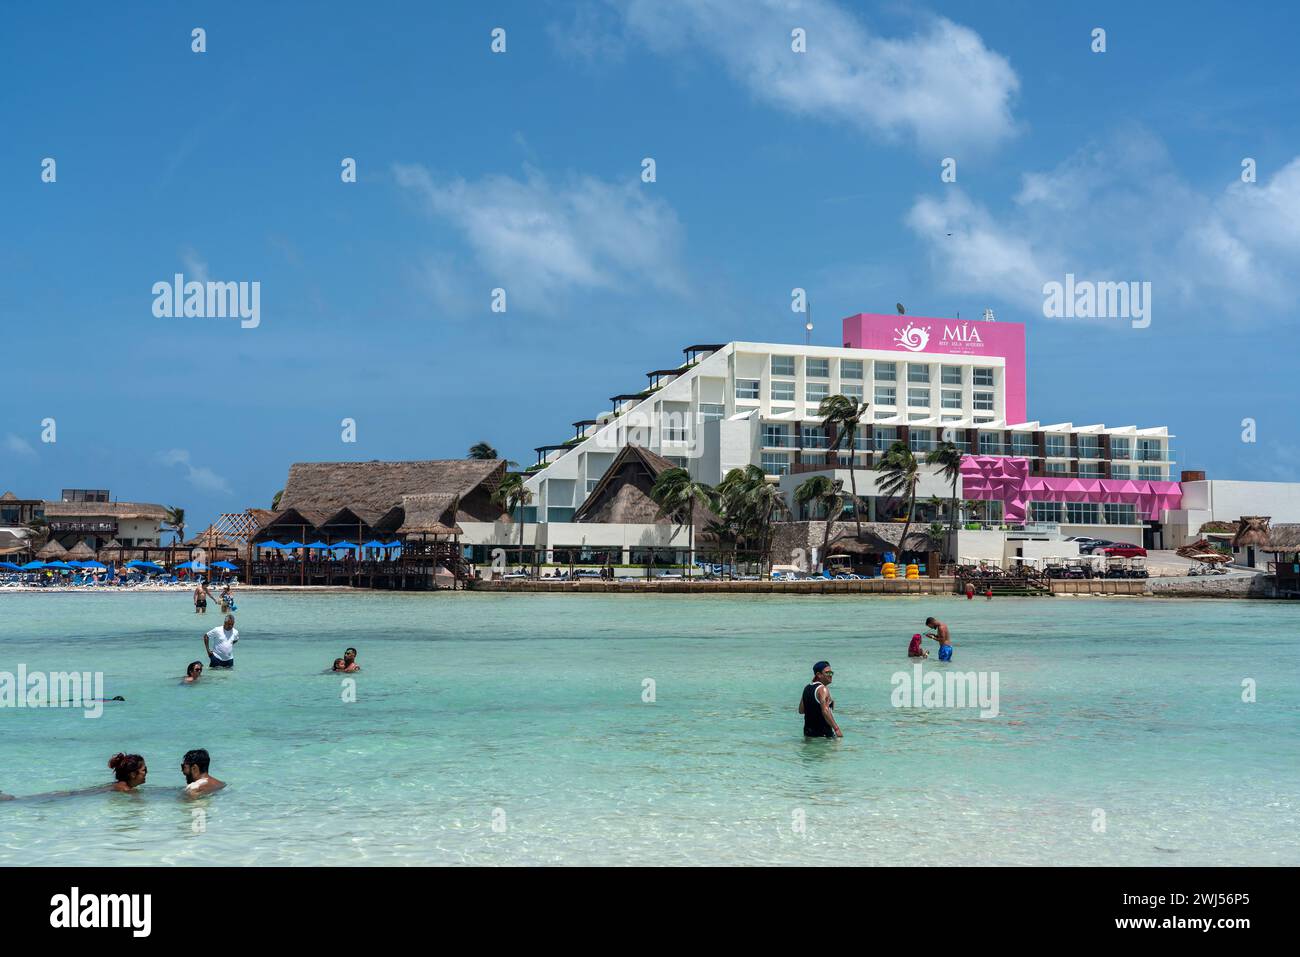 Isla Mujeres, Cancun, Mexico - September 13, 2021: Beautiful Caribbean beach Playa Norte or North beach on the Isla Mujeres near Stock Photo